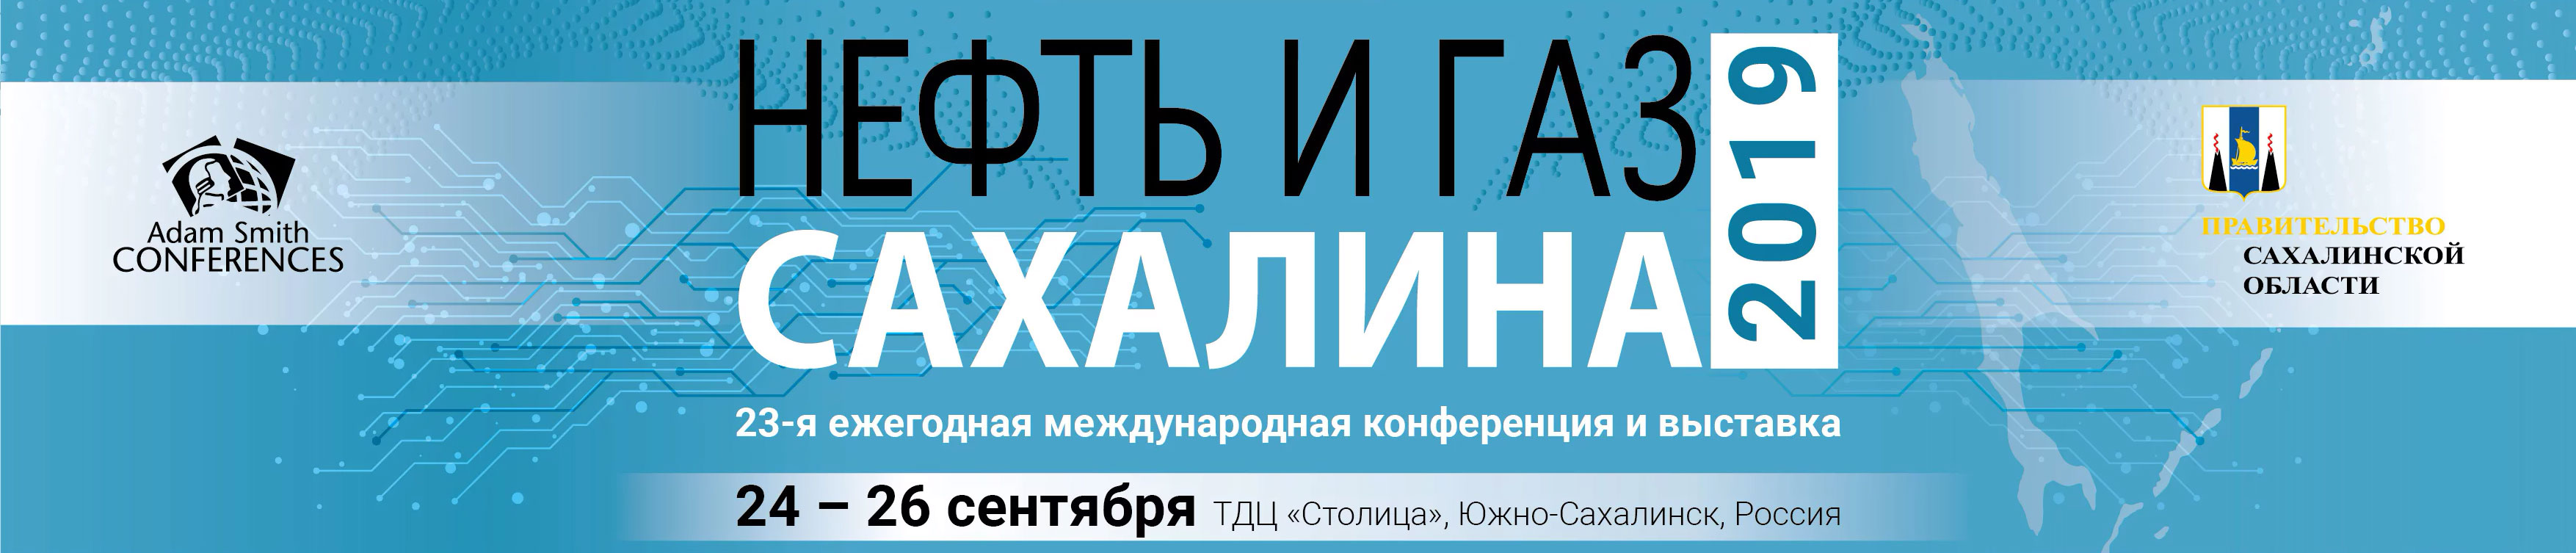 XXII Международная конференция и выставка  «Нефть и газ Сахалина 2019» , г. Южно-Сахалинск